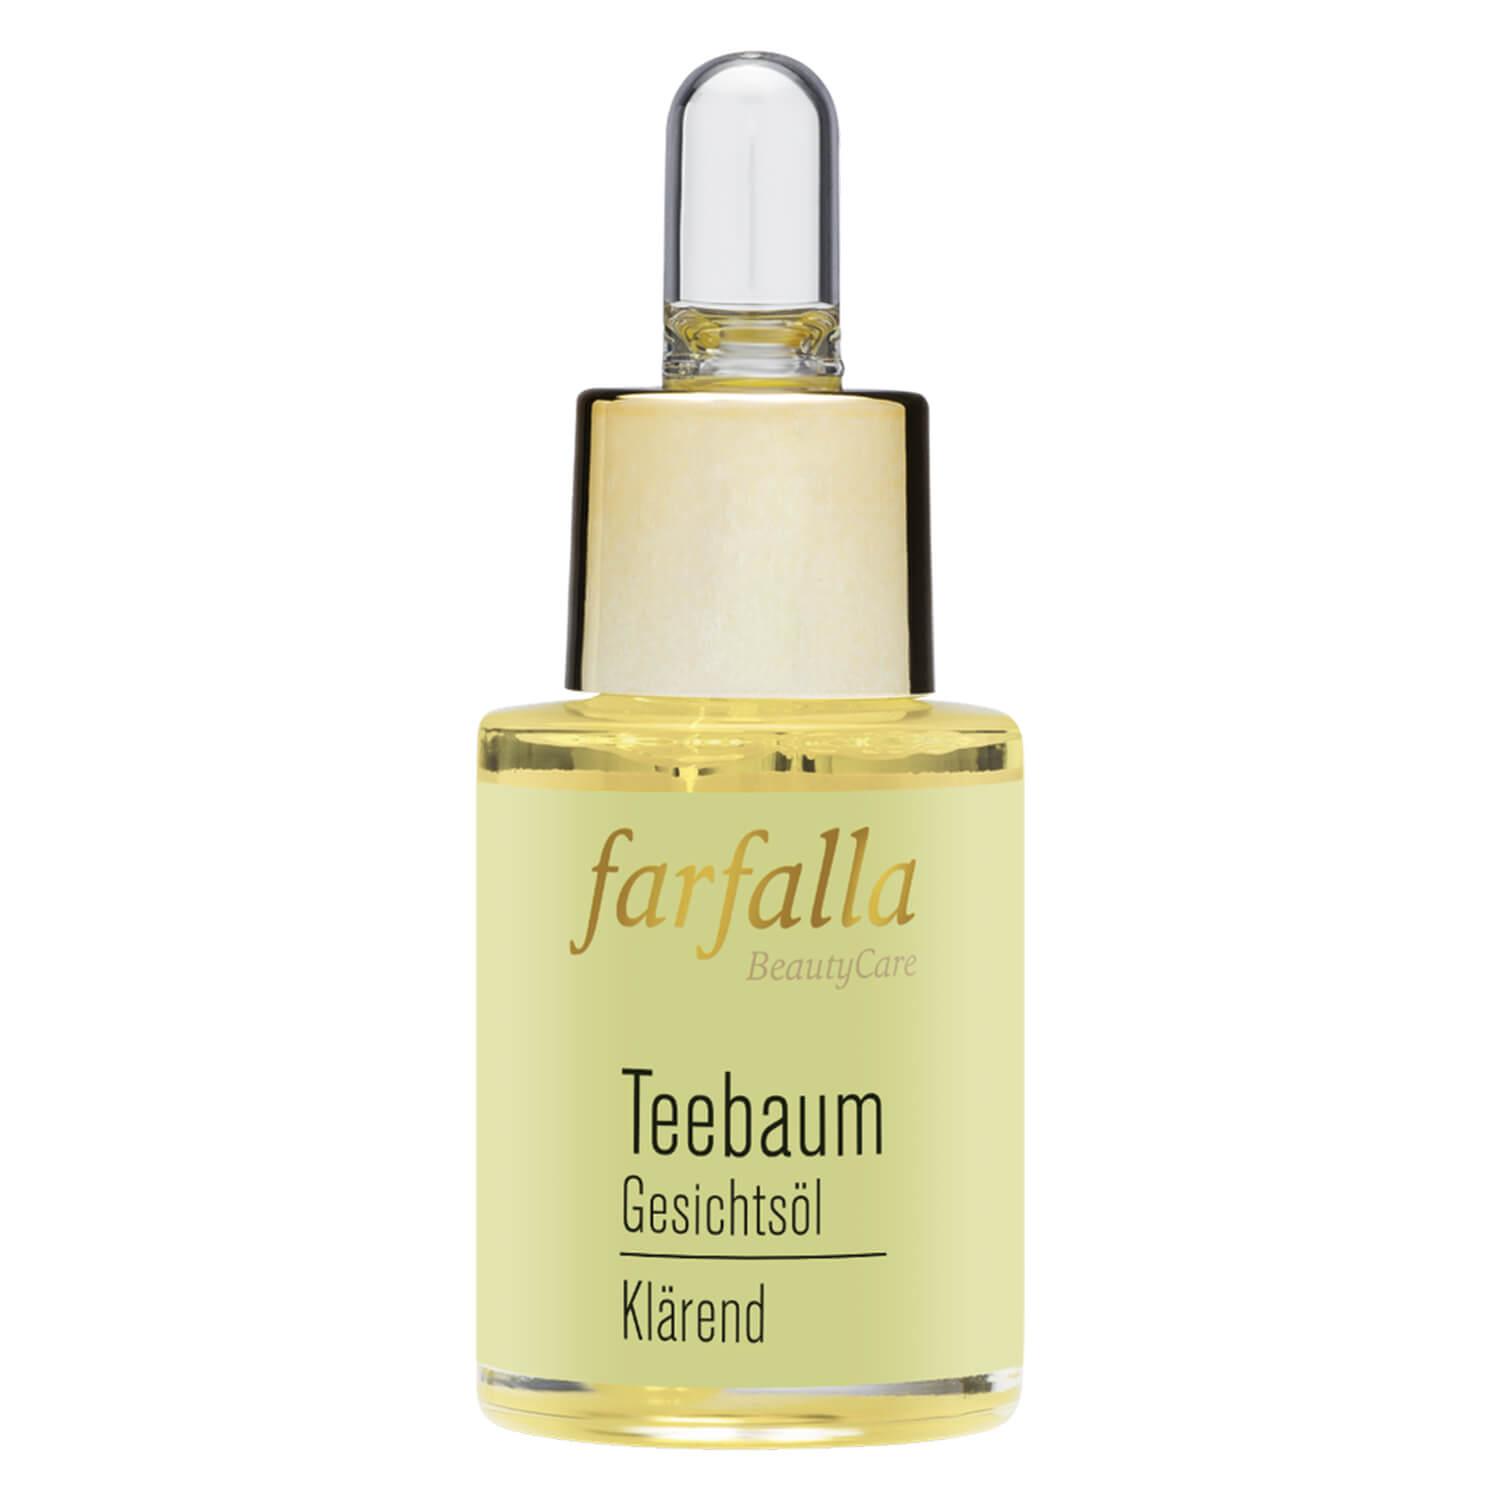 Farfalla Gesichtsöl - Teebaum Facial oil